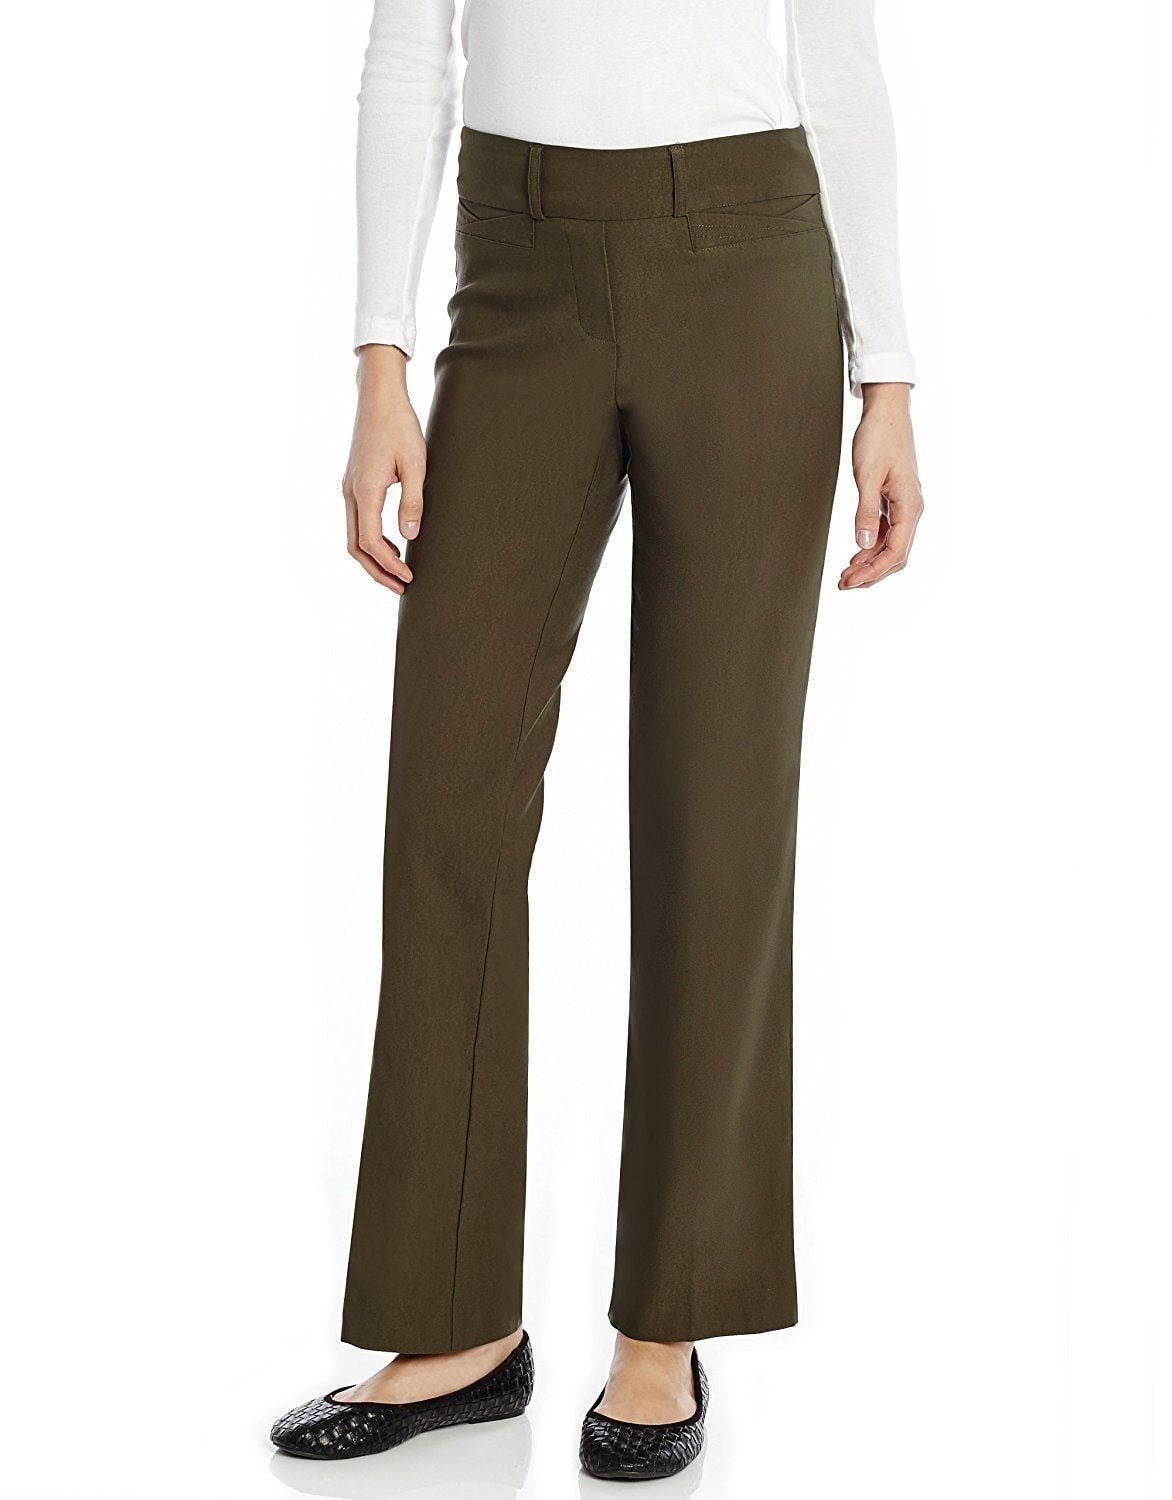 Women's Pants Stretchable Slight Boot Cut Comfort Pants Pull On (Size 4 ...